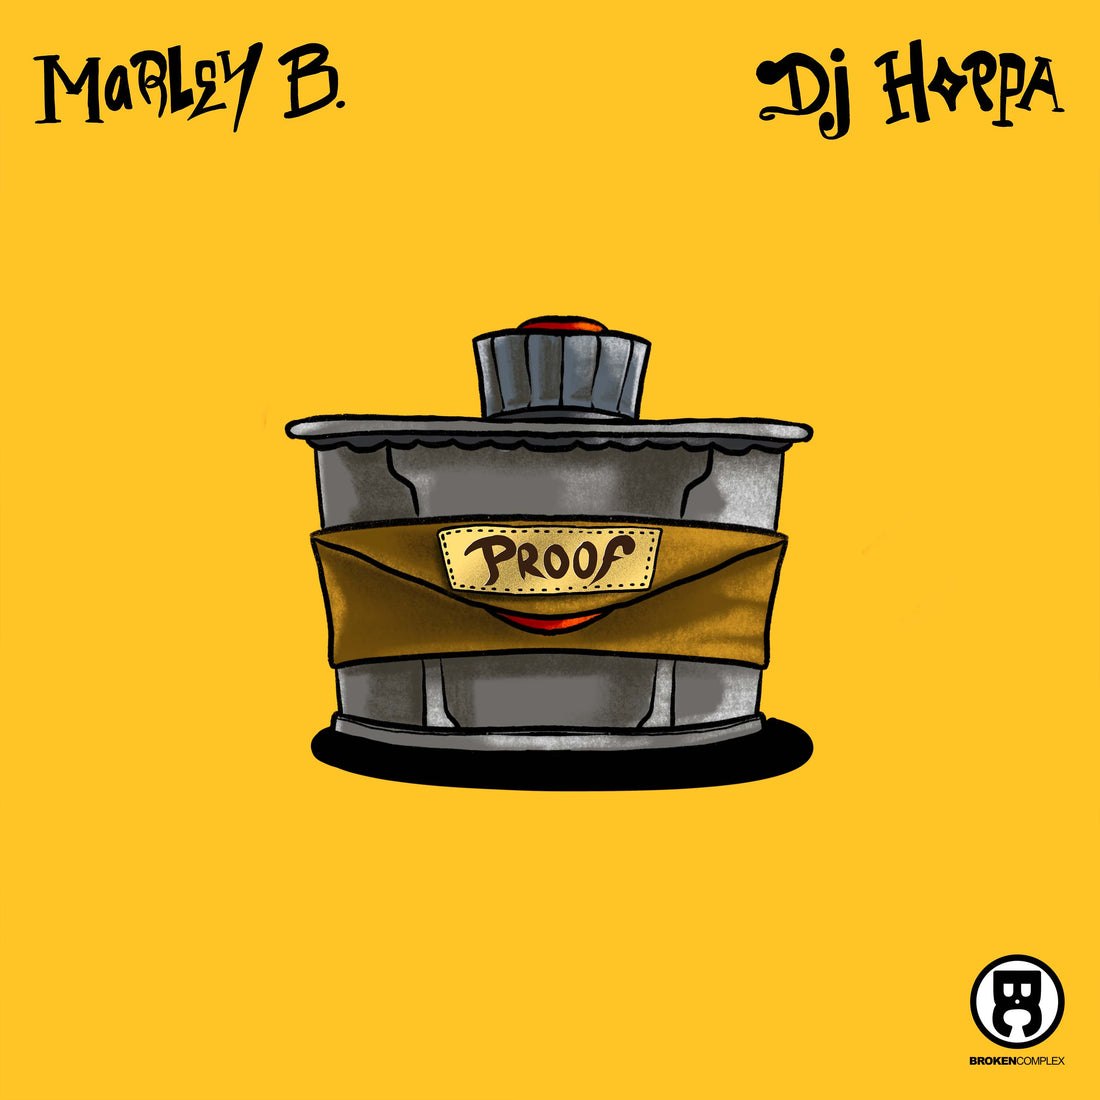 New Single: Marley B. & DJ Hoppa - "Proof"